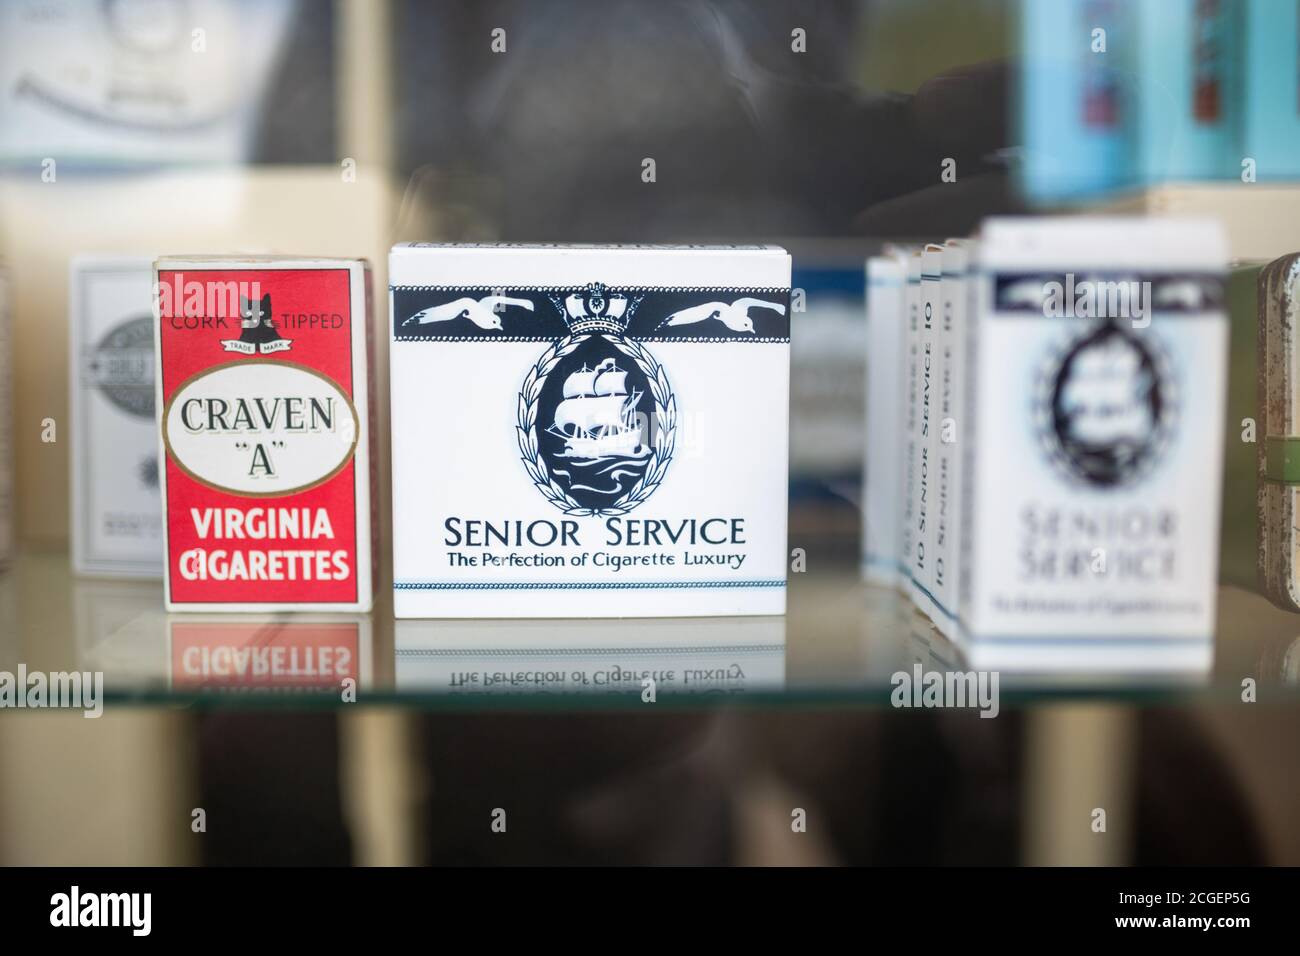 British cigarette brands from the twentieth century - senior service, crave a Stock Photo